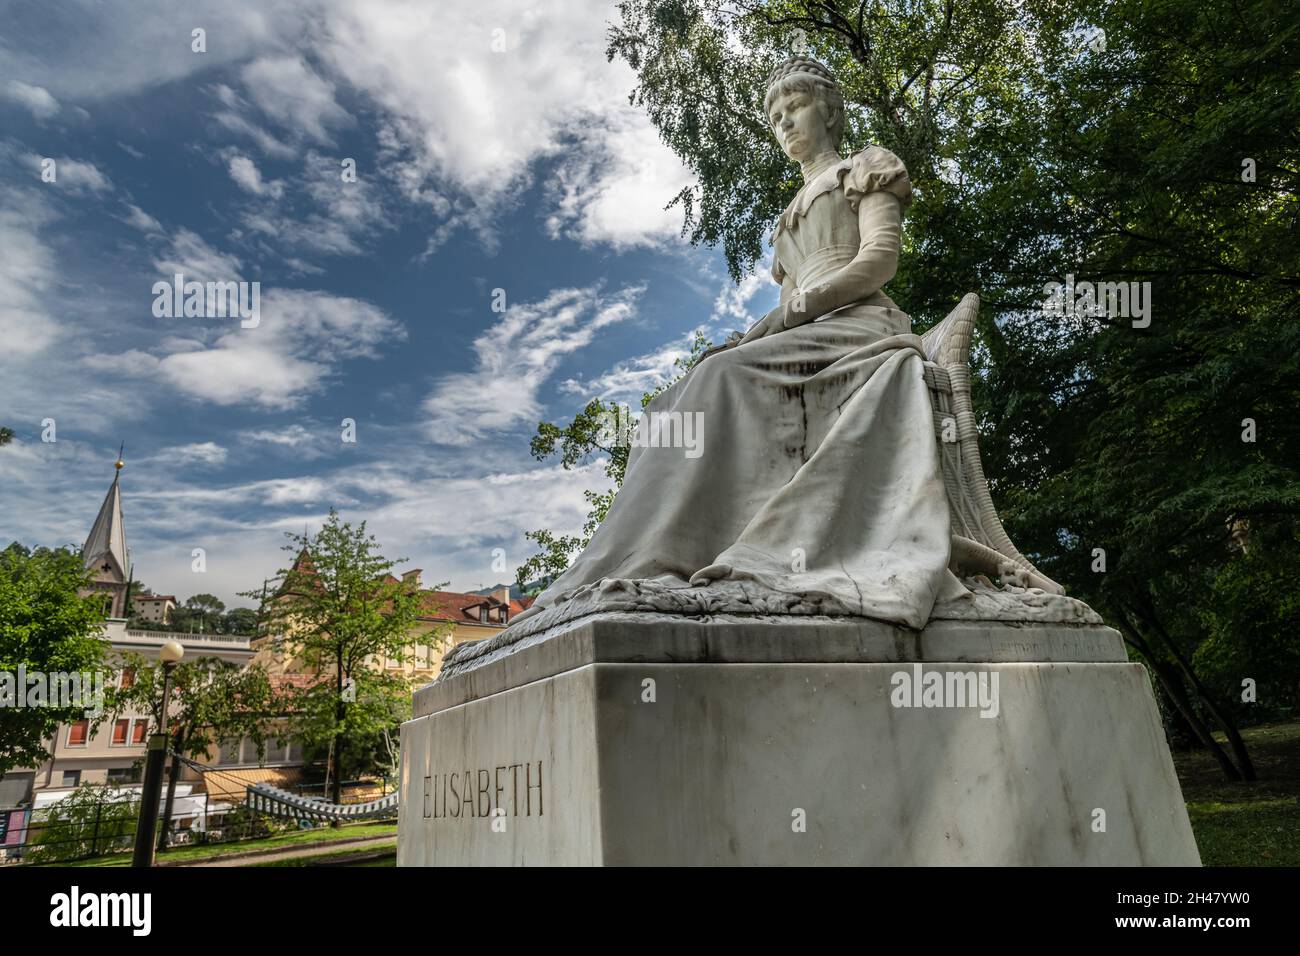 Statue of Elisabeth of Austria (Sissi) in Merano - Meran, Trentino-Alto Adige, Italy Stock Photo